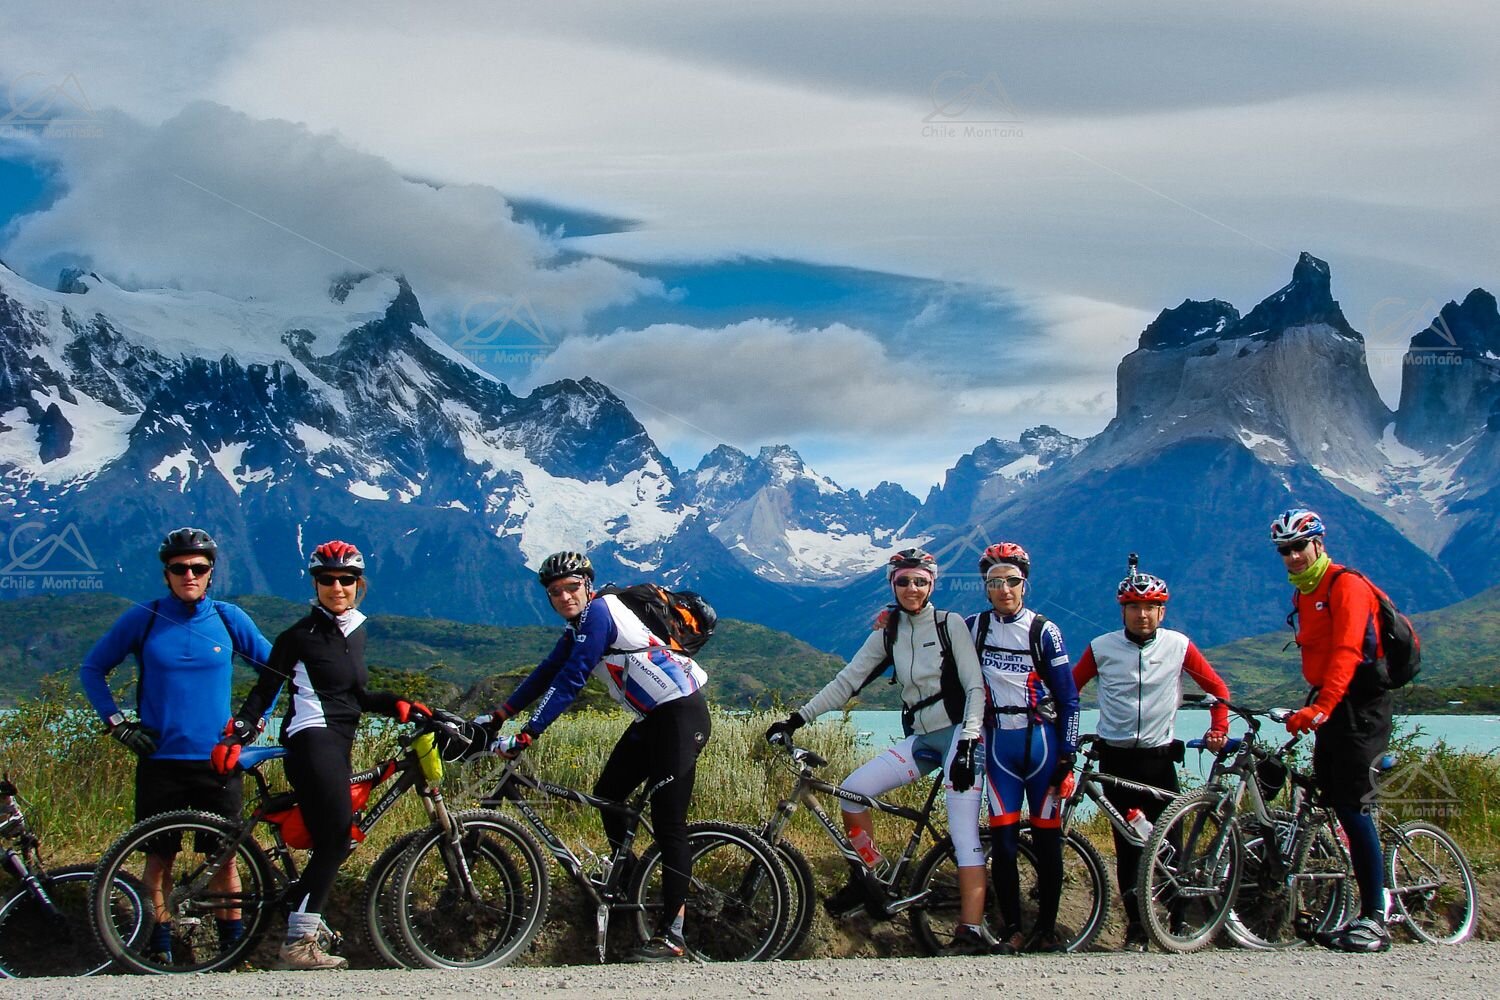 ChileMontana Patagonia in Two Wheels 13h.jpg